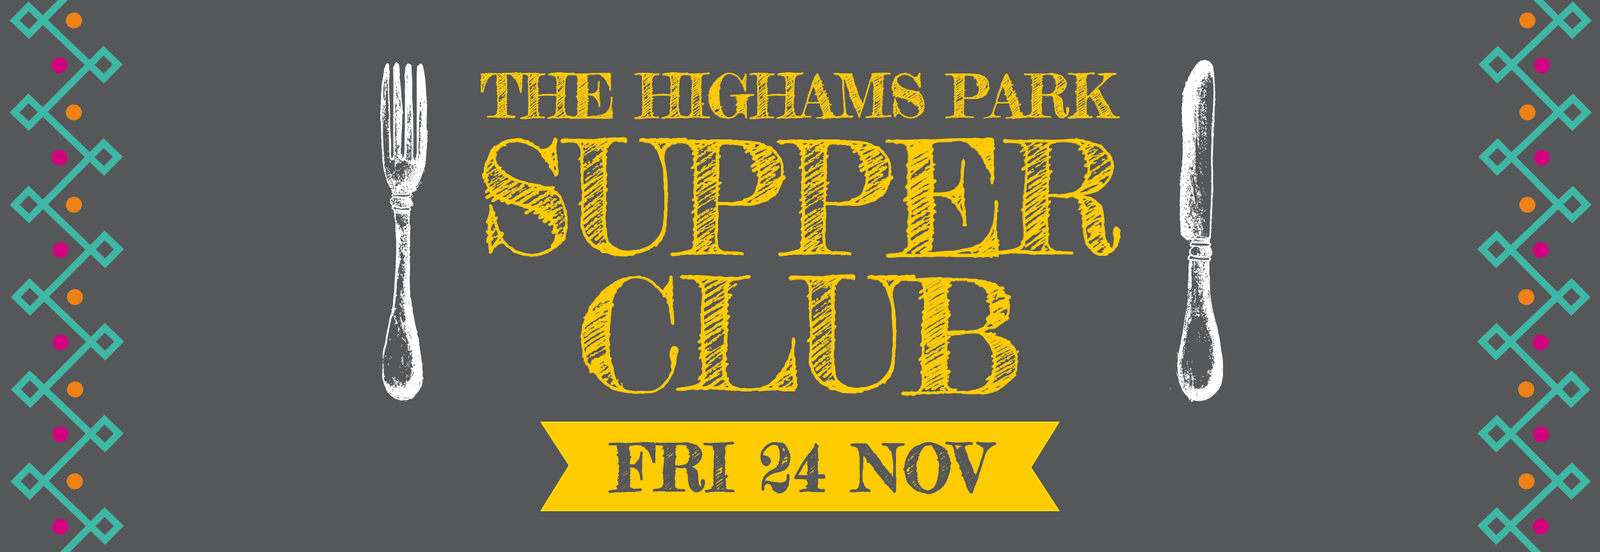 The Highams Park Supper Club